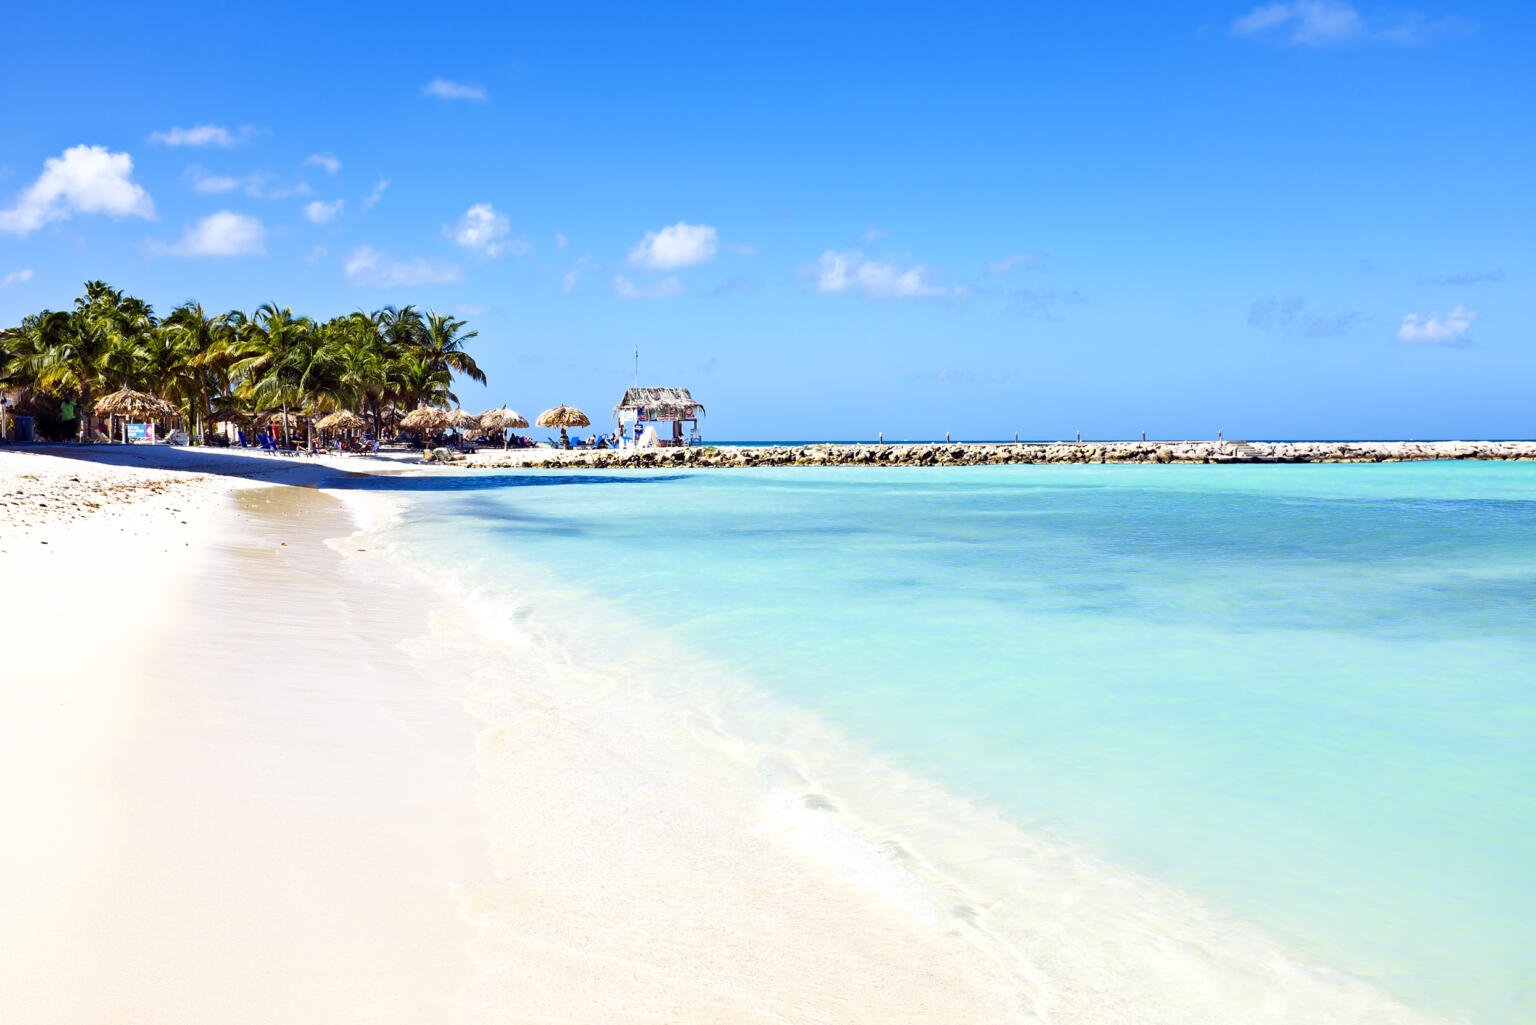 Tranquil blue sea and white sand beach in Aruba